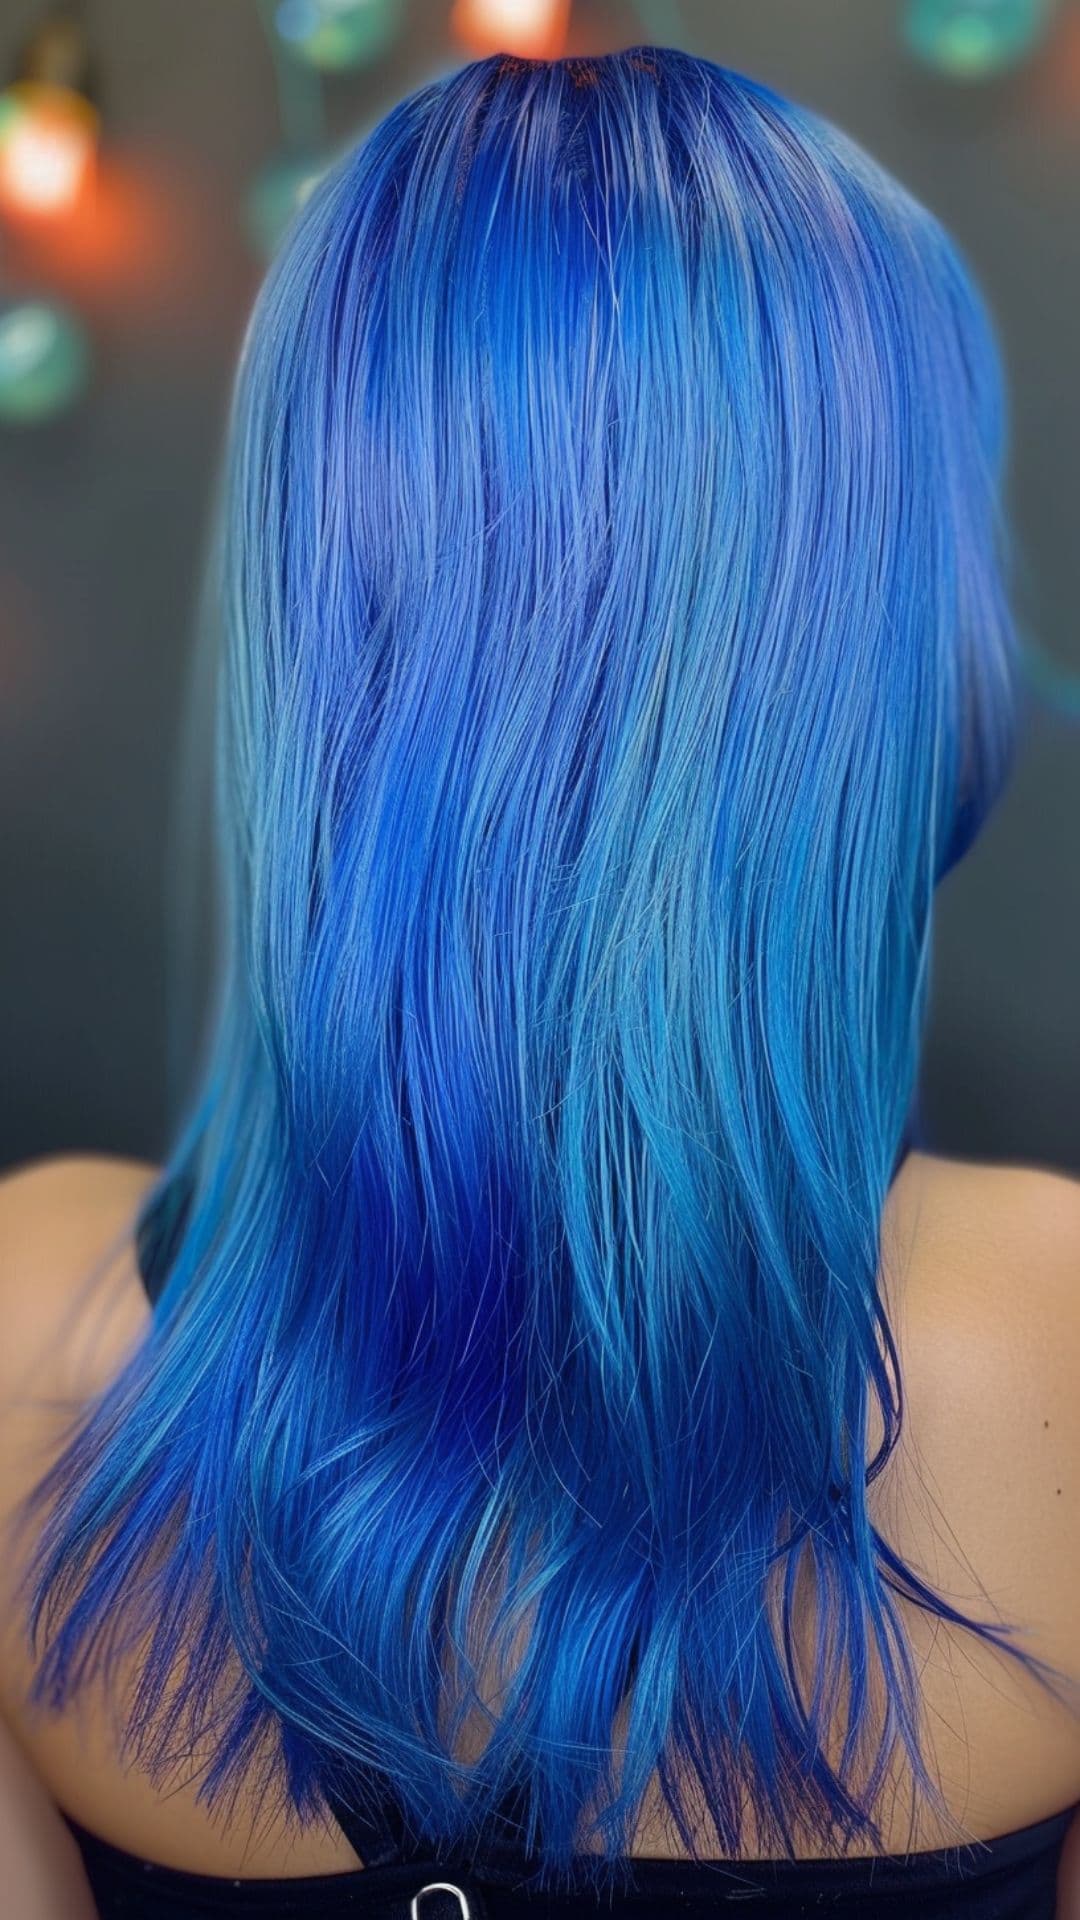 A woman modelling an electric blue hair.